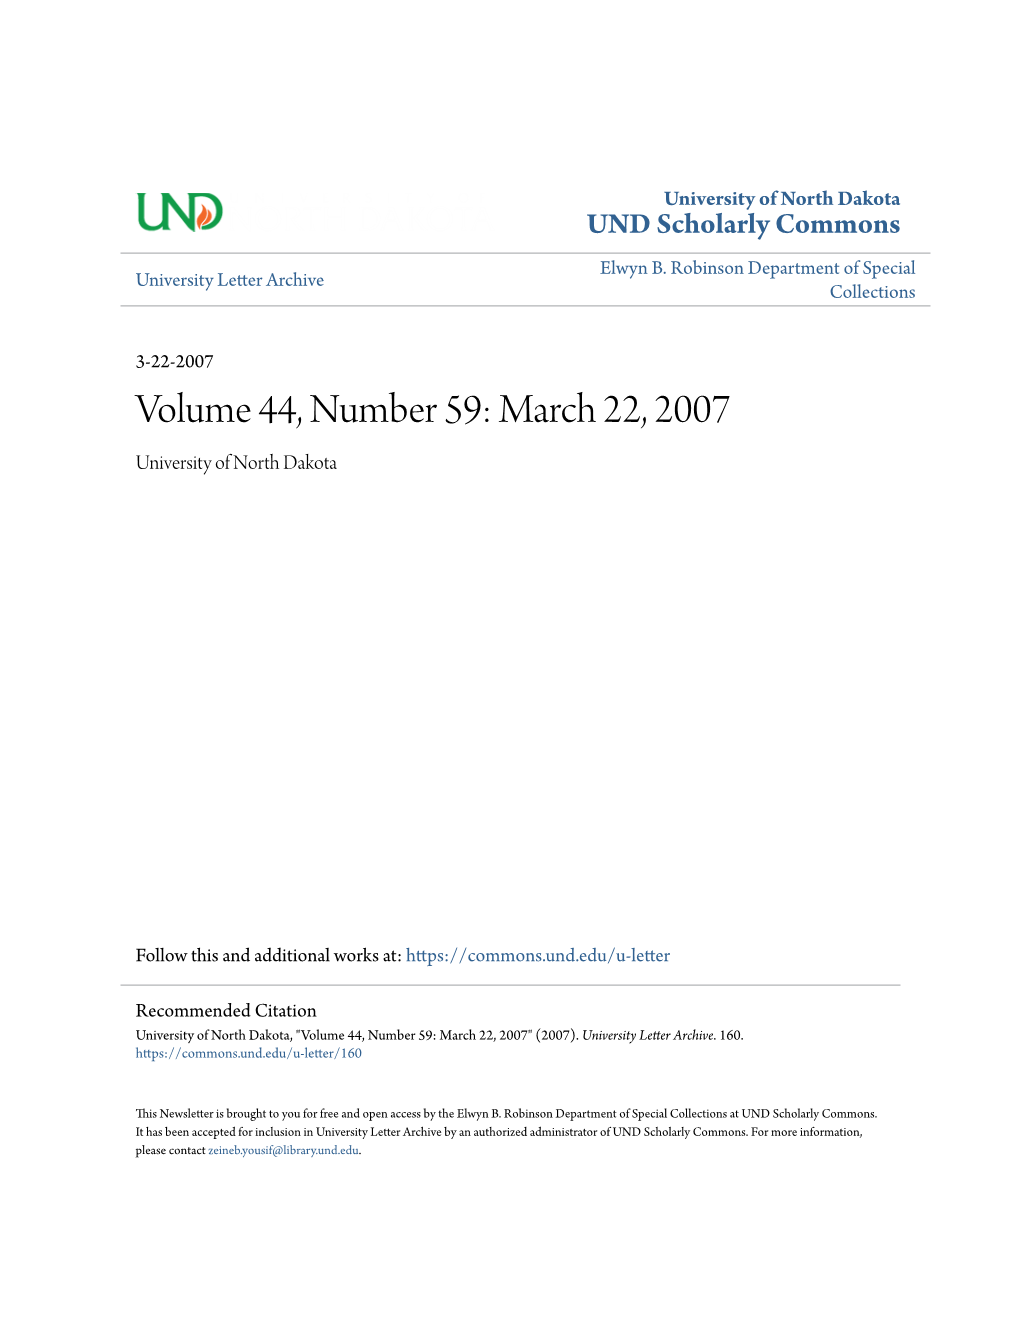 Volume 44, Number 59: March 22, 2007 University of North Dakota